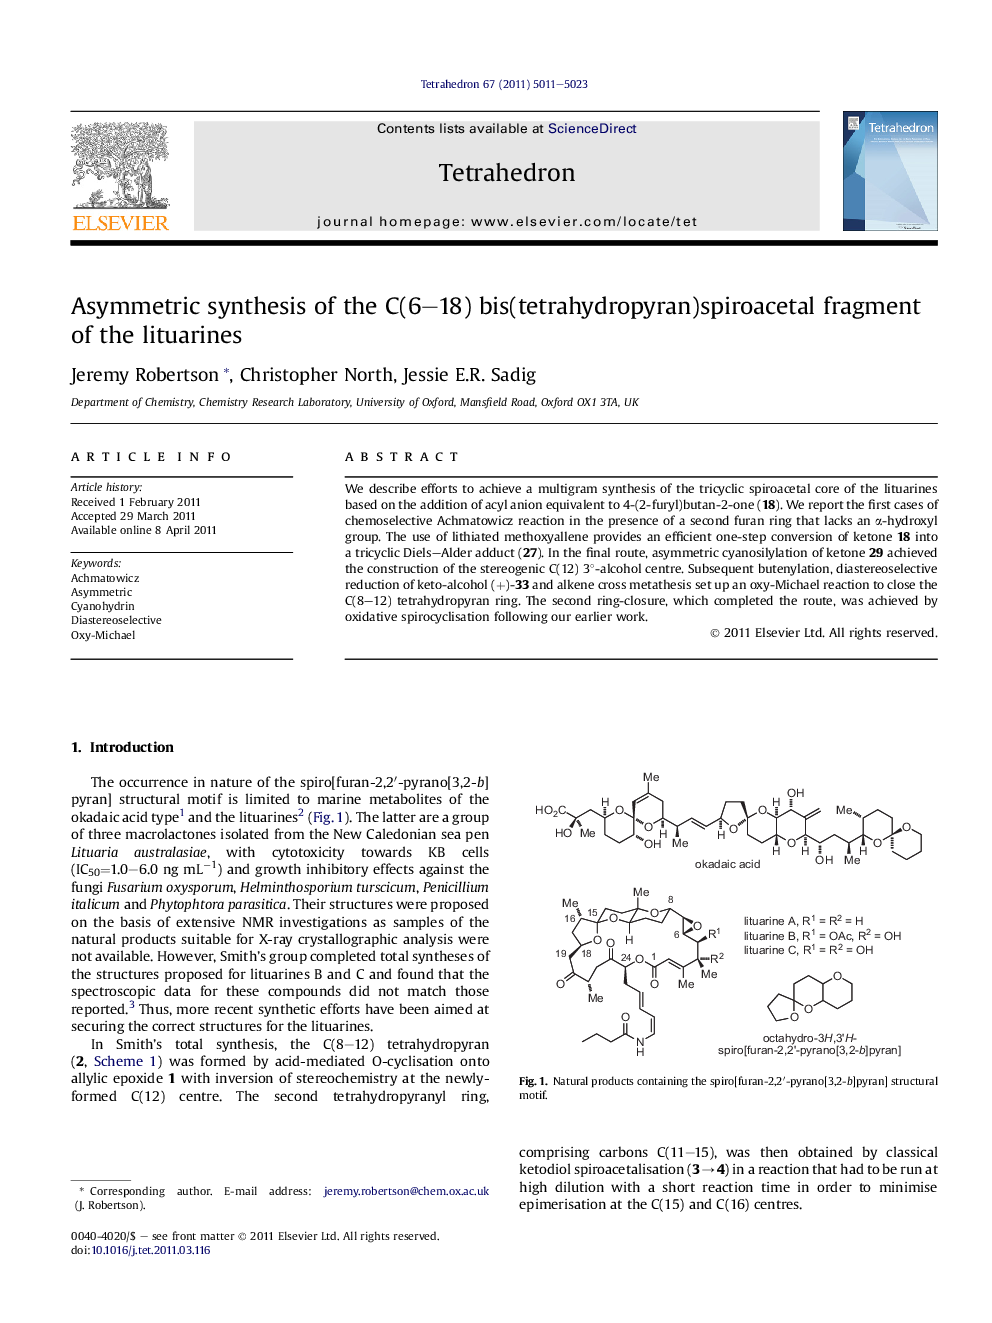 Asymmetric synthesis of the C(6-18) bis(tetrahydropyran)spiroacetal fragment of the lituarines